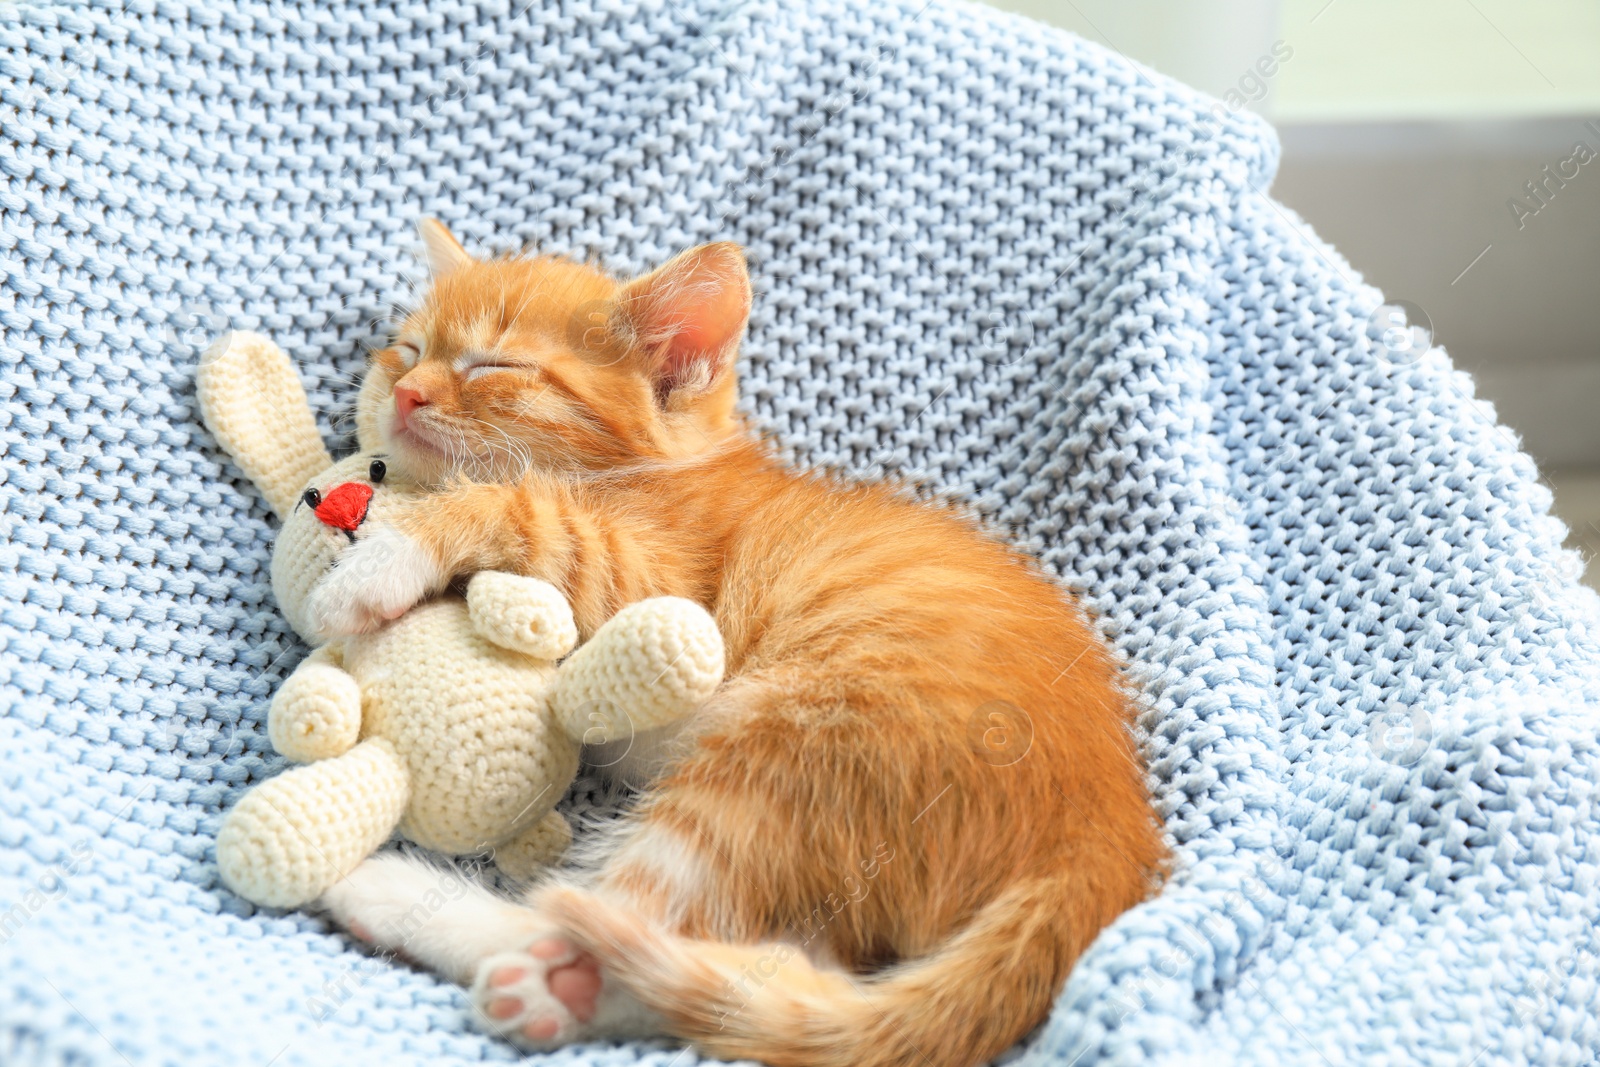 Photo of Sleeping cute little kitten with toy on light blue blanket